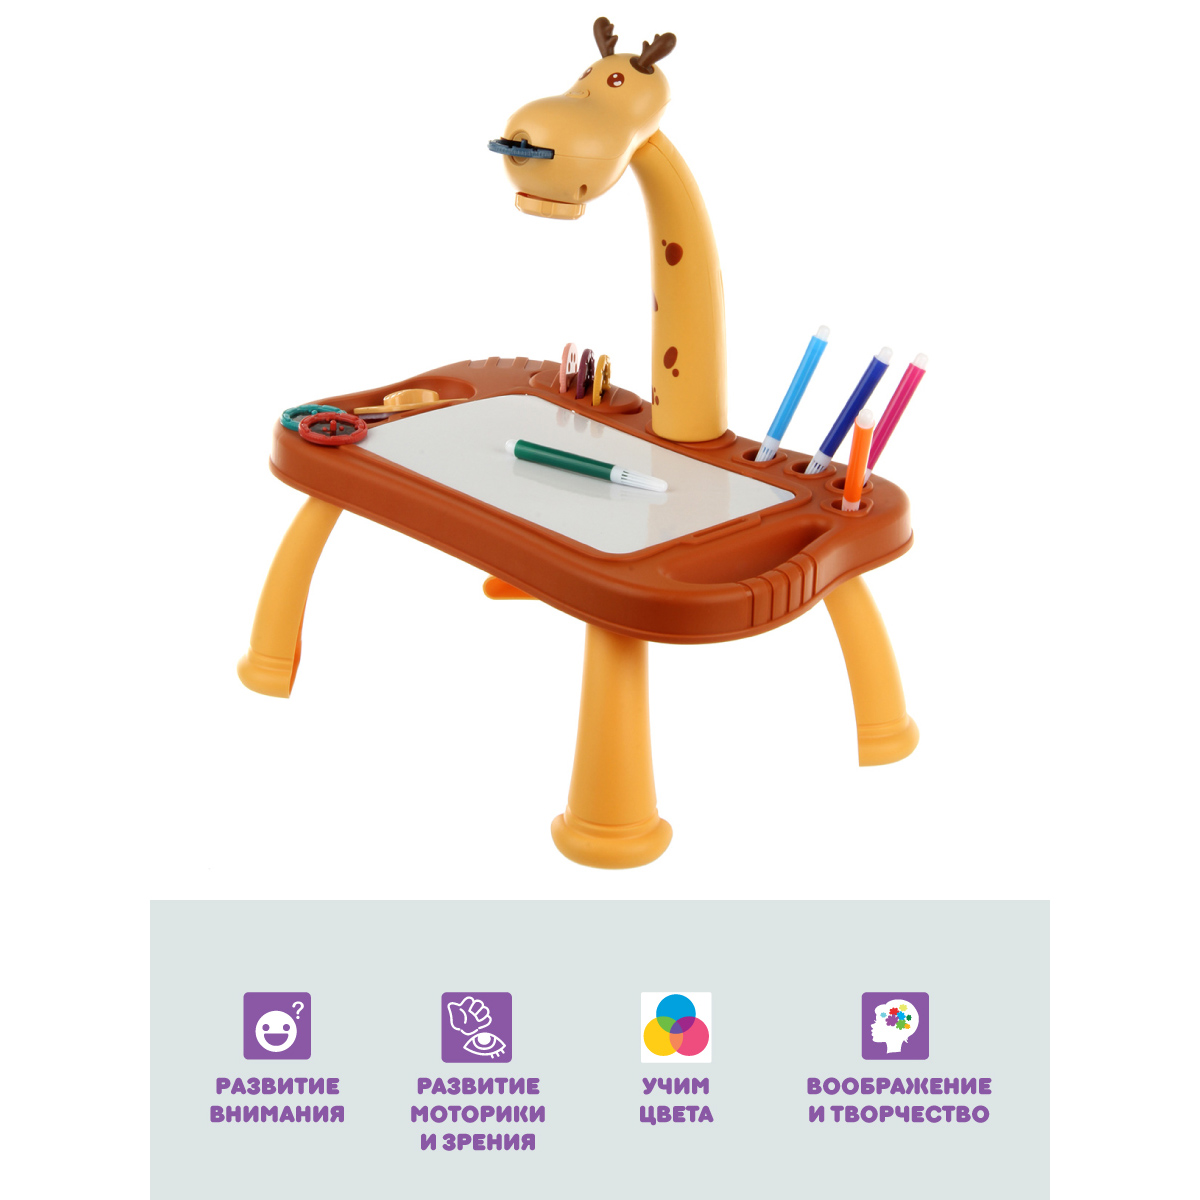 Развивающий столик Ути Пути доска для рисования с проектором Жирафик - фото 8